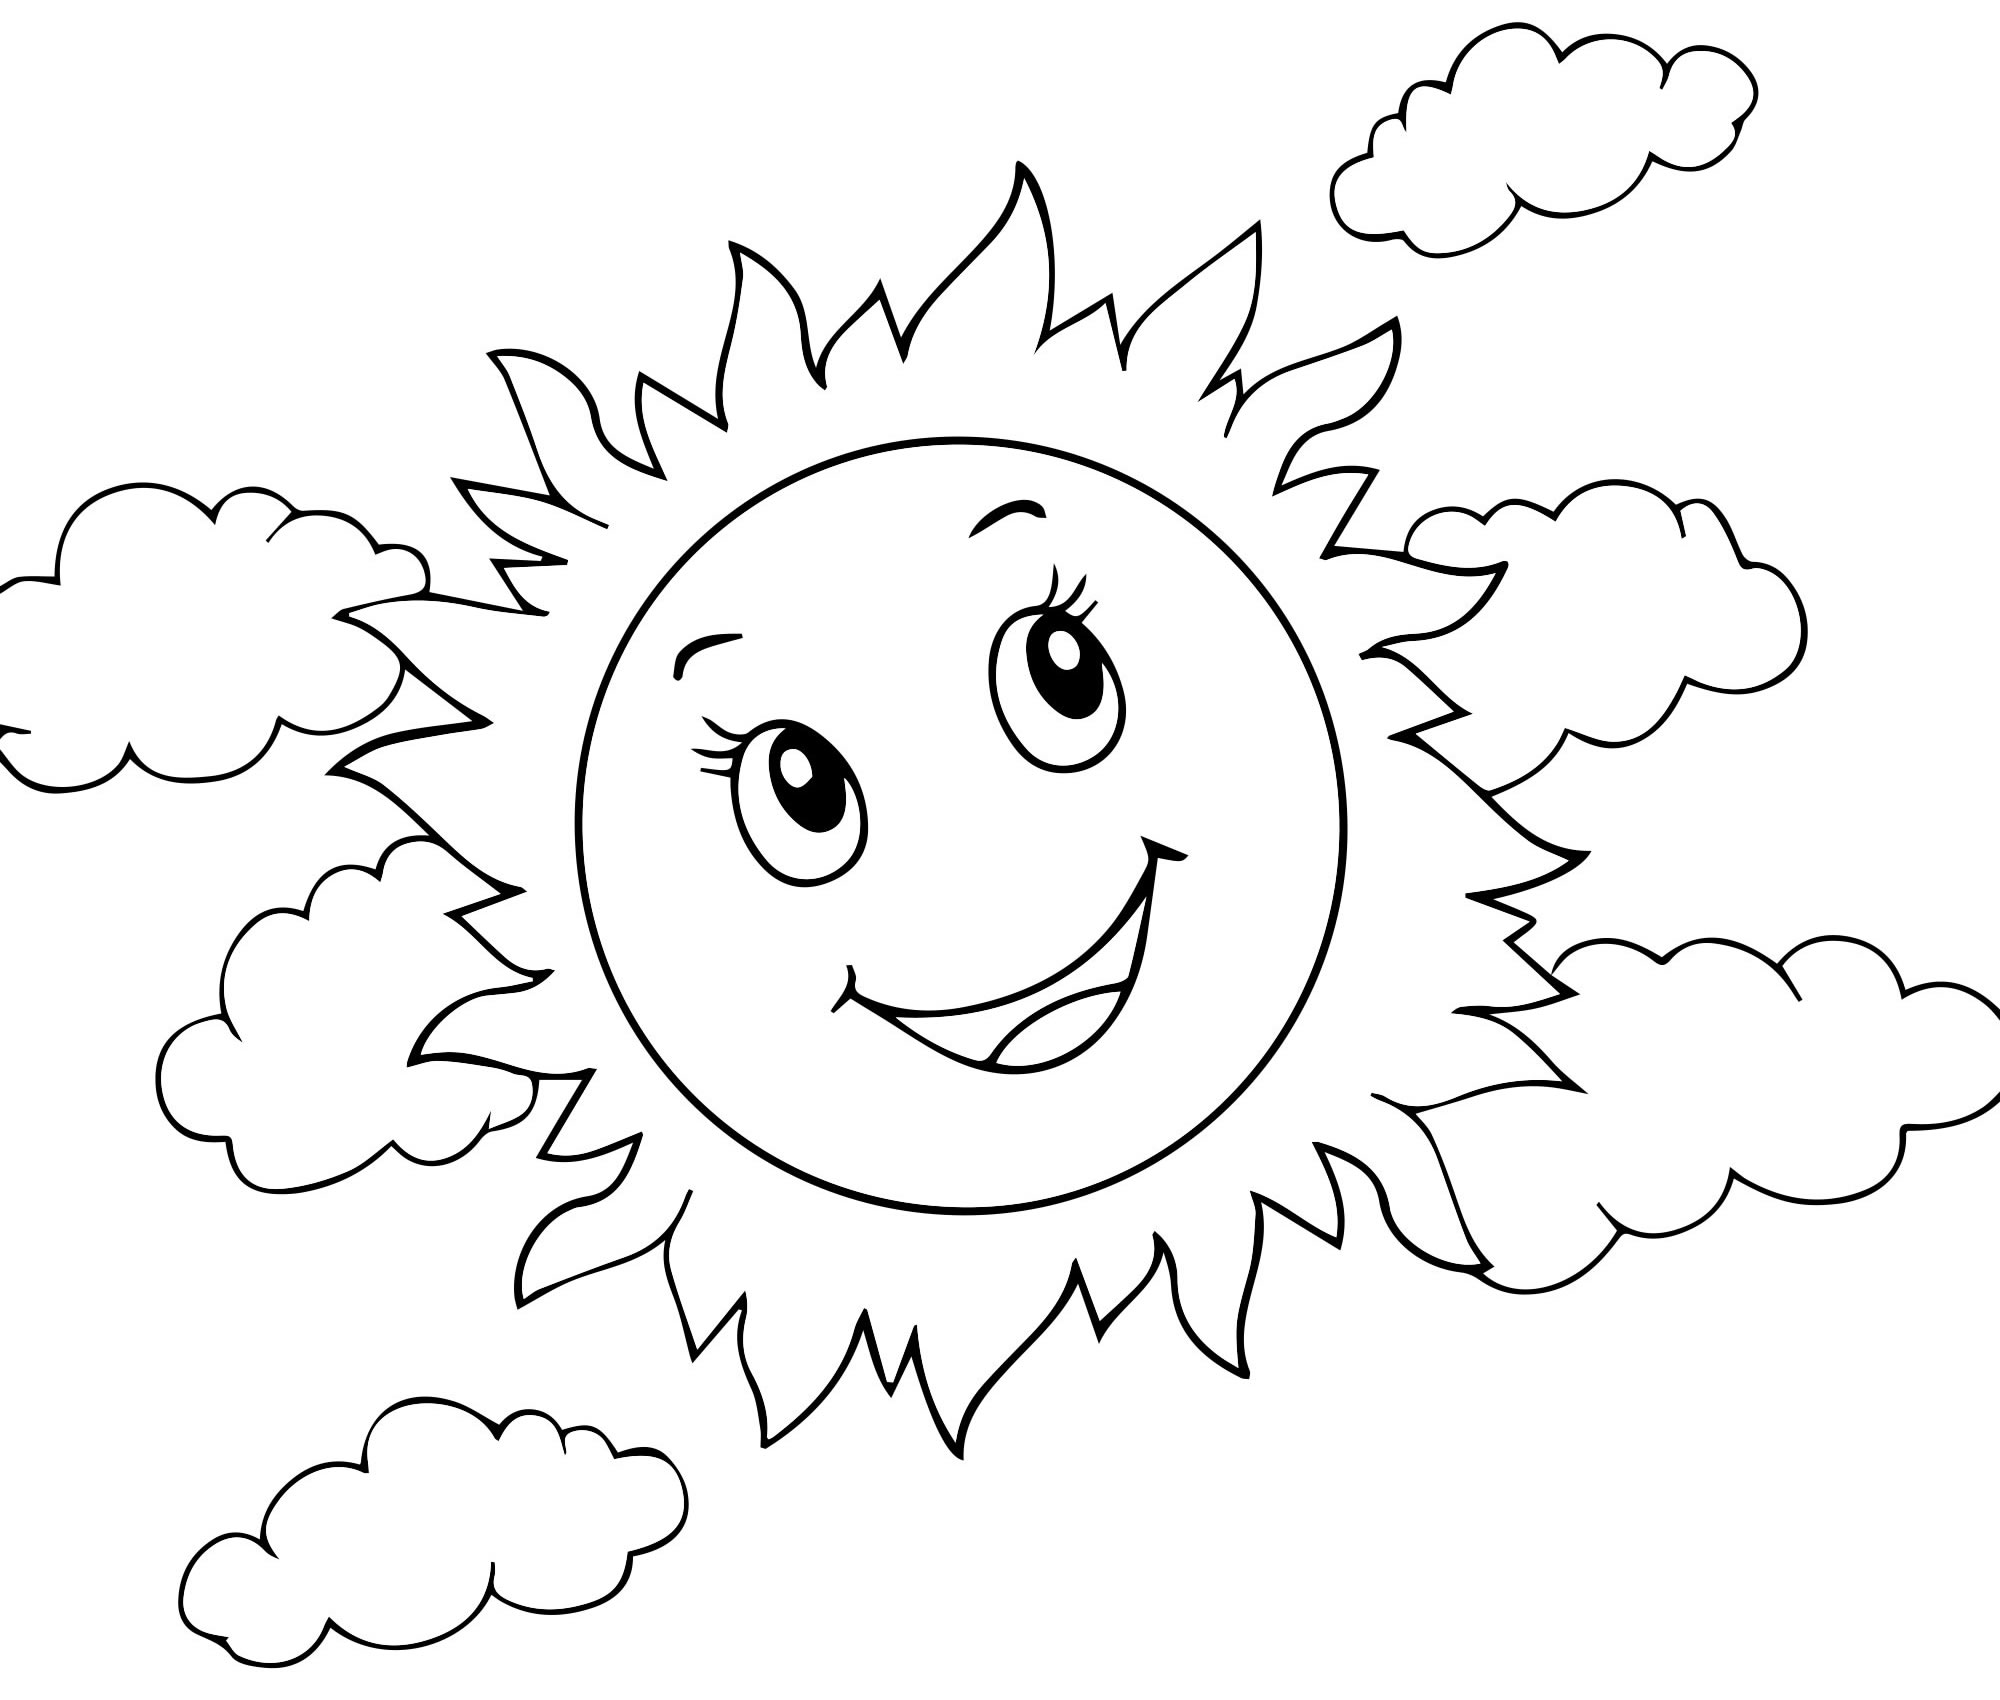 Солнце и облака раскраска для детей